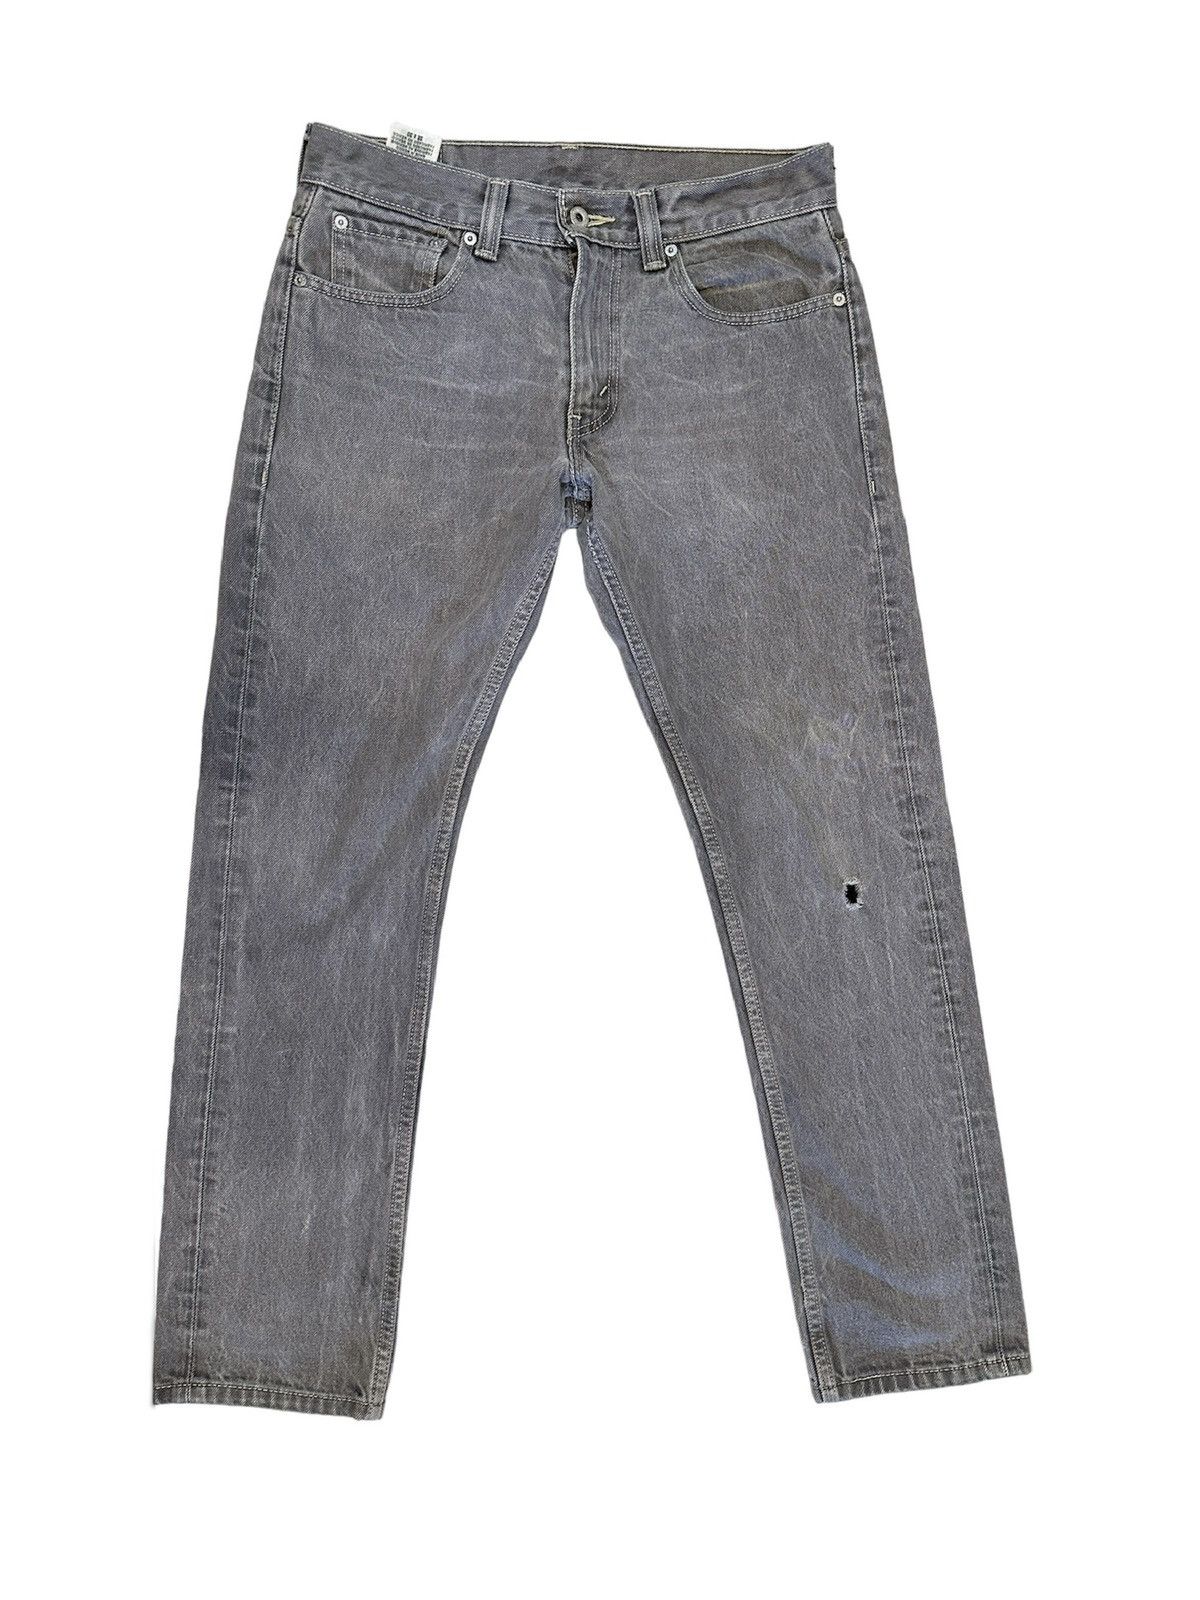 Vintage Vintage Gray Levi’s 511 Jeans | Grailed